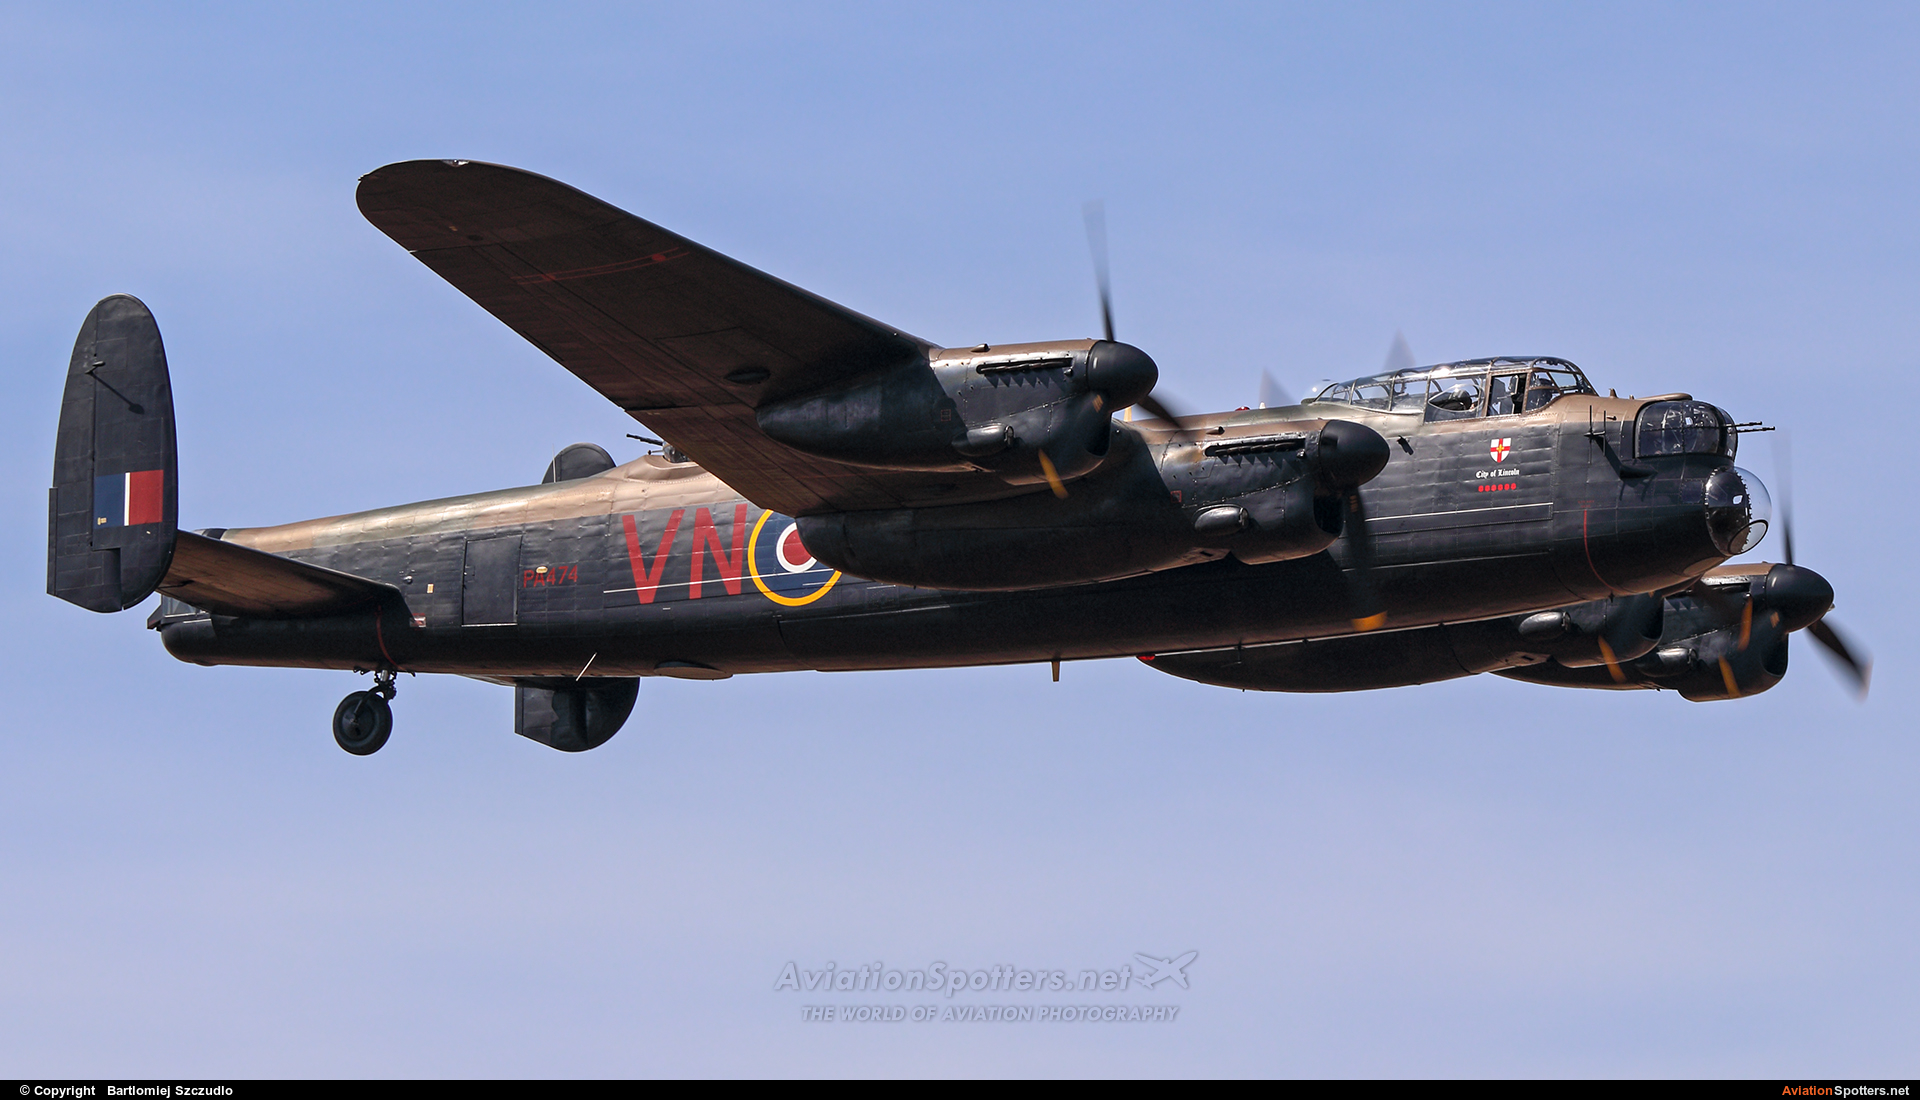 UK - Air Force: Battle of Britain Memorial Flight  -  683 Lancaster B. I  (PA474) By Bartlomiej Szczudlo  (BartekSzczudlo)